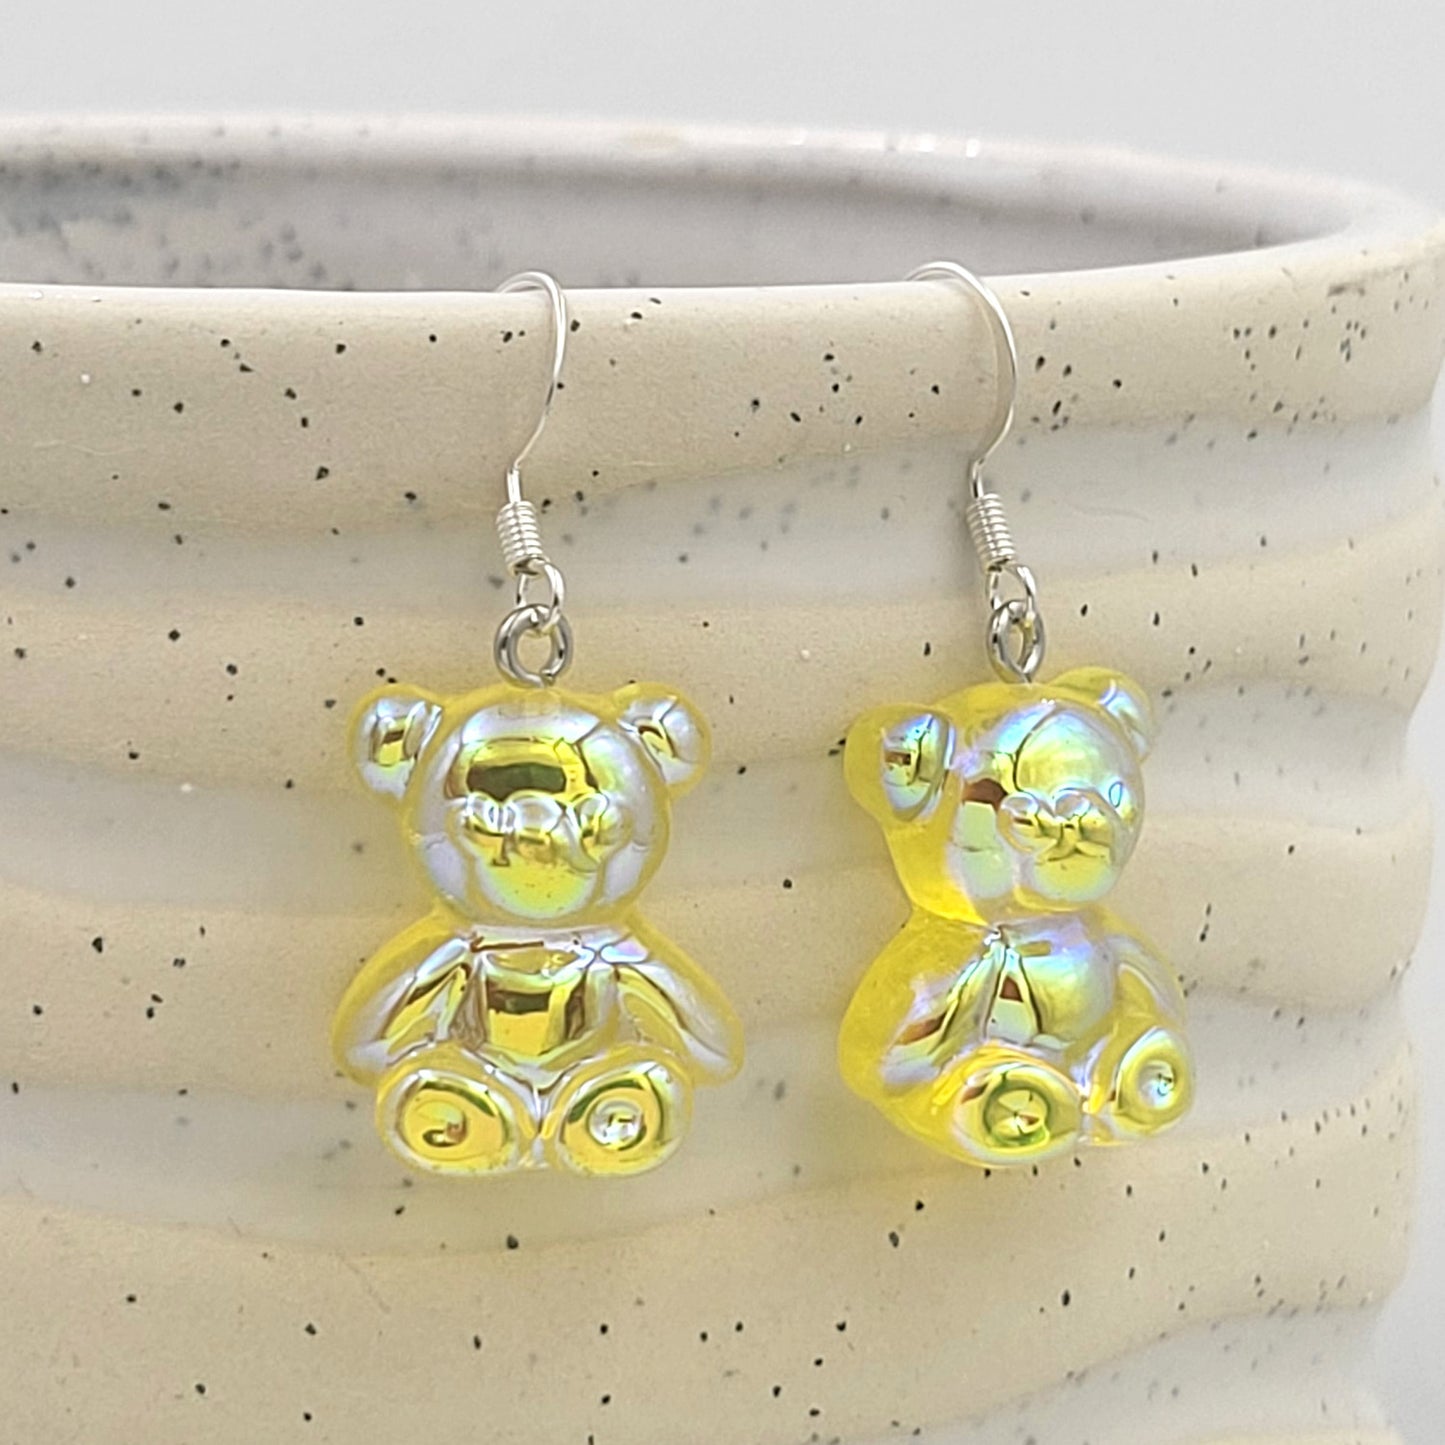 BESHEEK Silvertone and Yellow Resin Gummy Bear Dangle Earrings | Hypoallergenic Boho Kitchsy Artistic Funky Cute Style Fashion Earrings